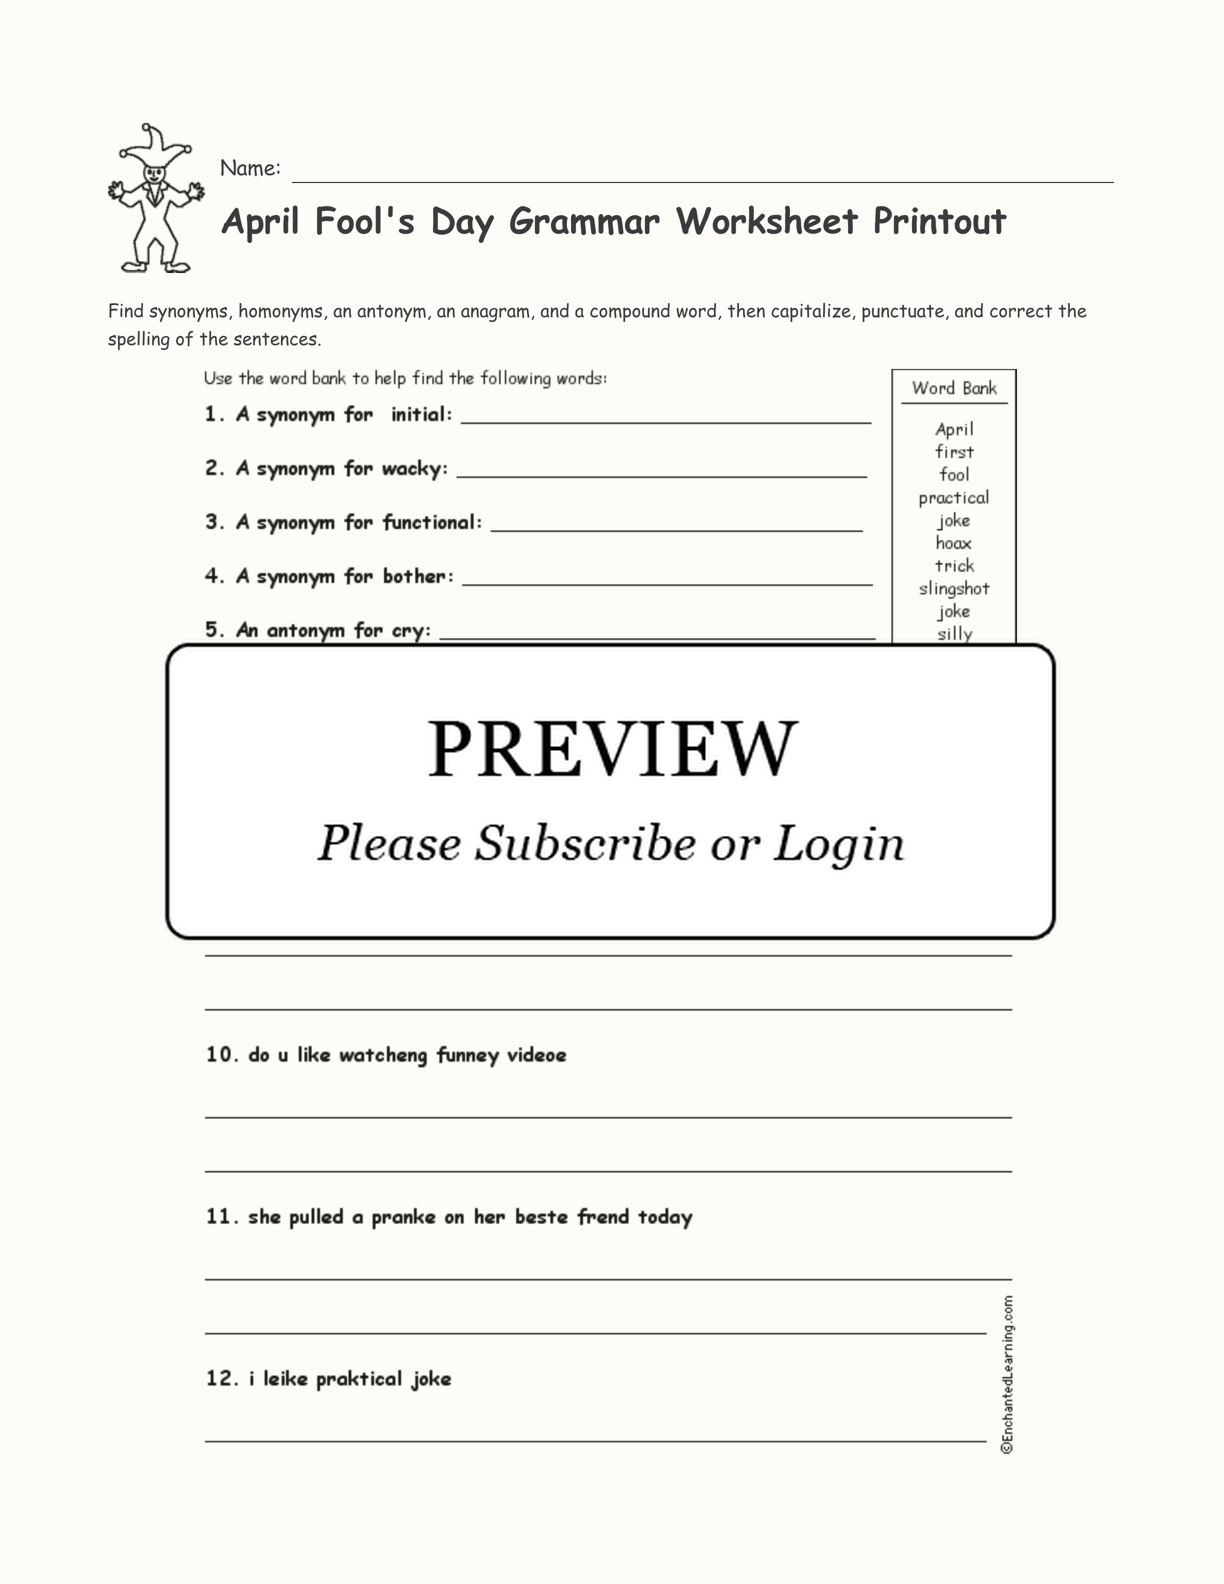 April Fool's Day Grammar Worksheet Printout interactive worksheet page 1